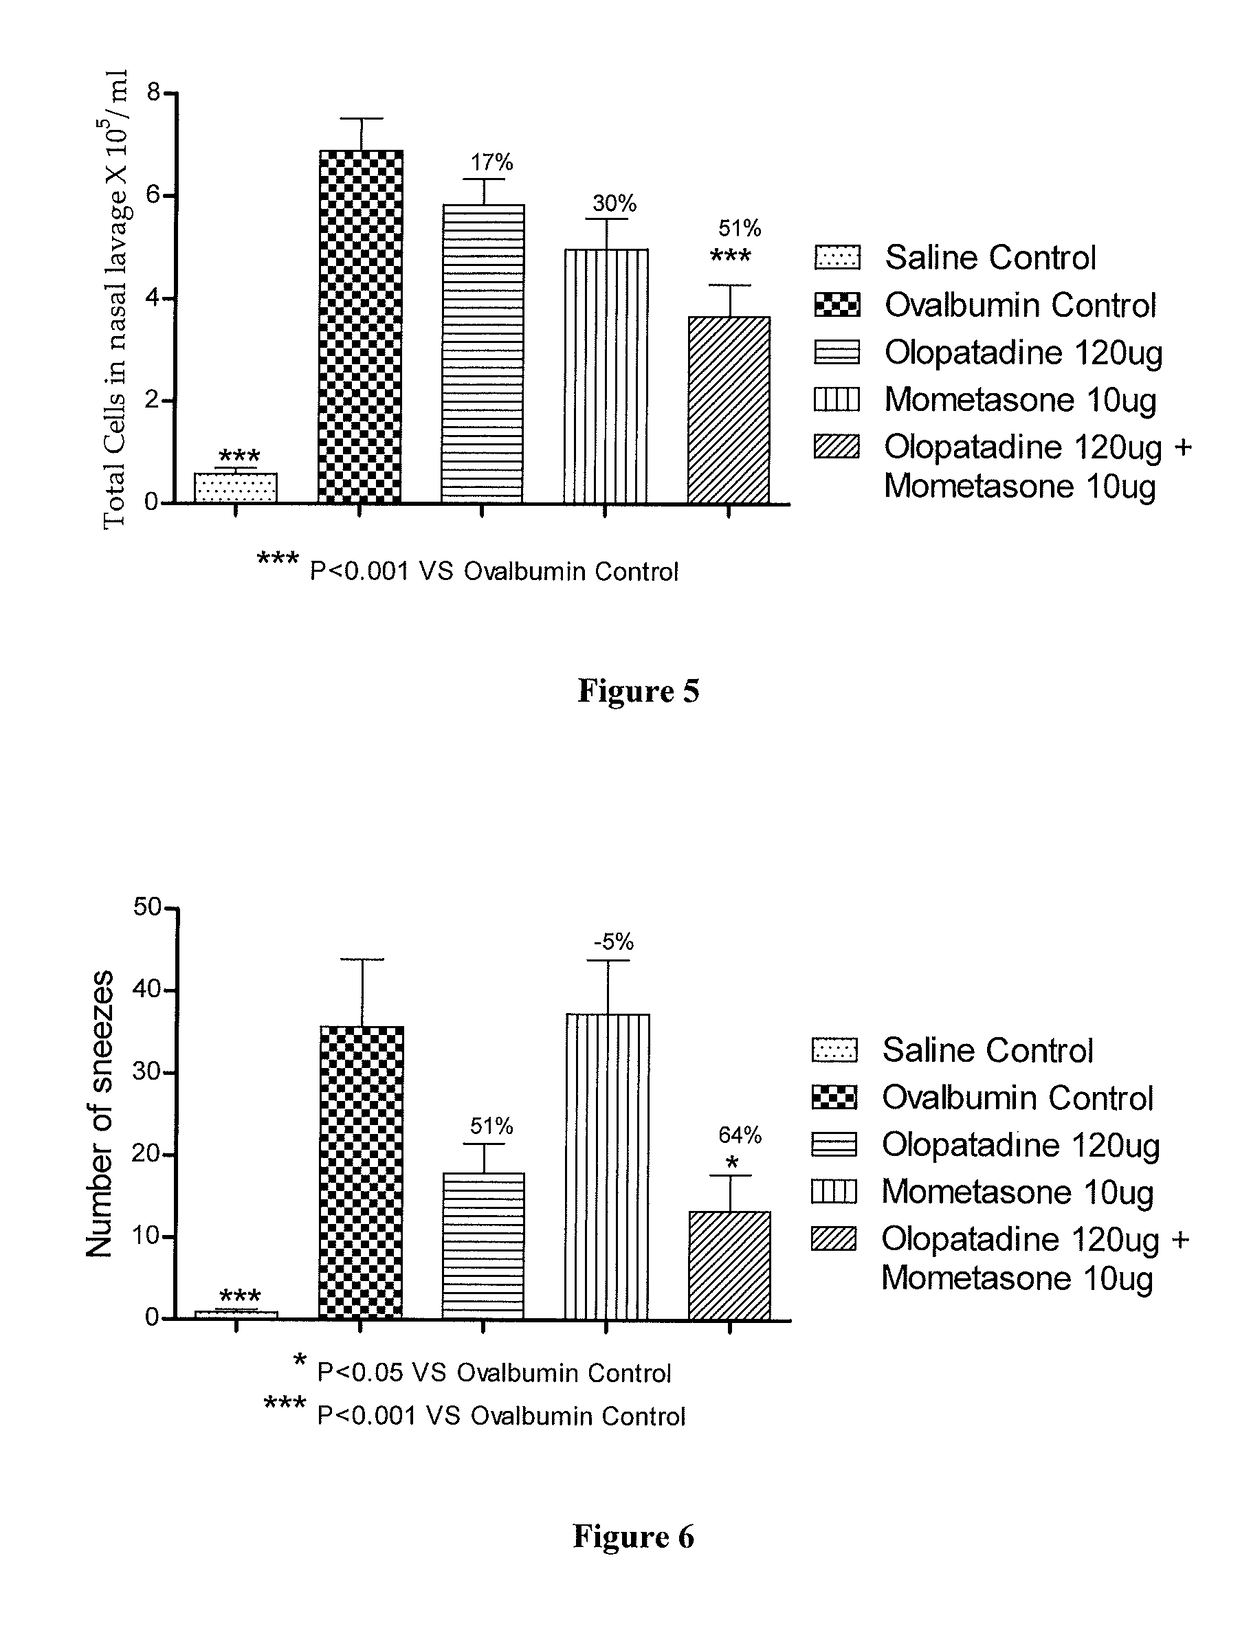 Treatment of allergic rhinitis using a combination of mometasone and olopatadine